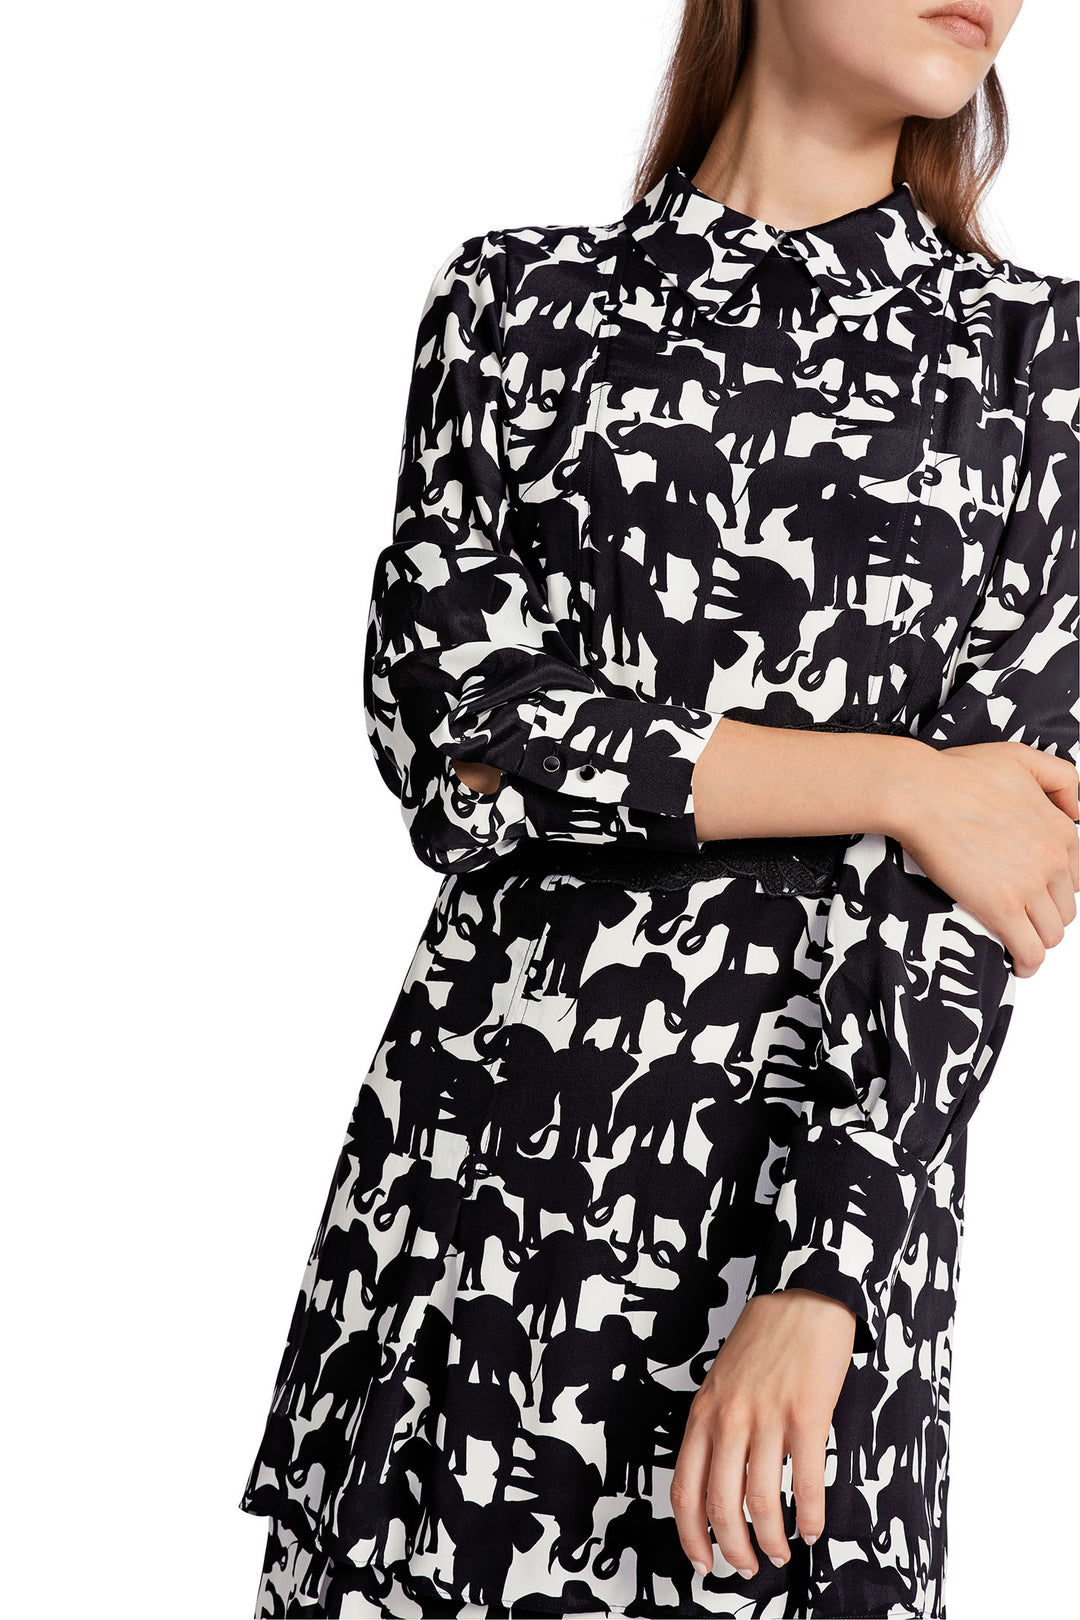 Marc Cain Collection WC 21.18 W12 910 Black White Elephant Print Dress - Olivia Grace Fashion